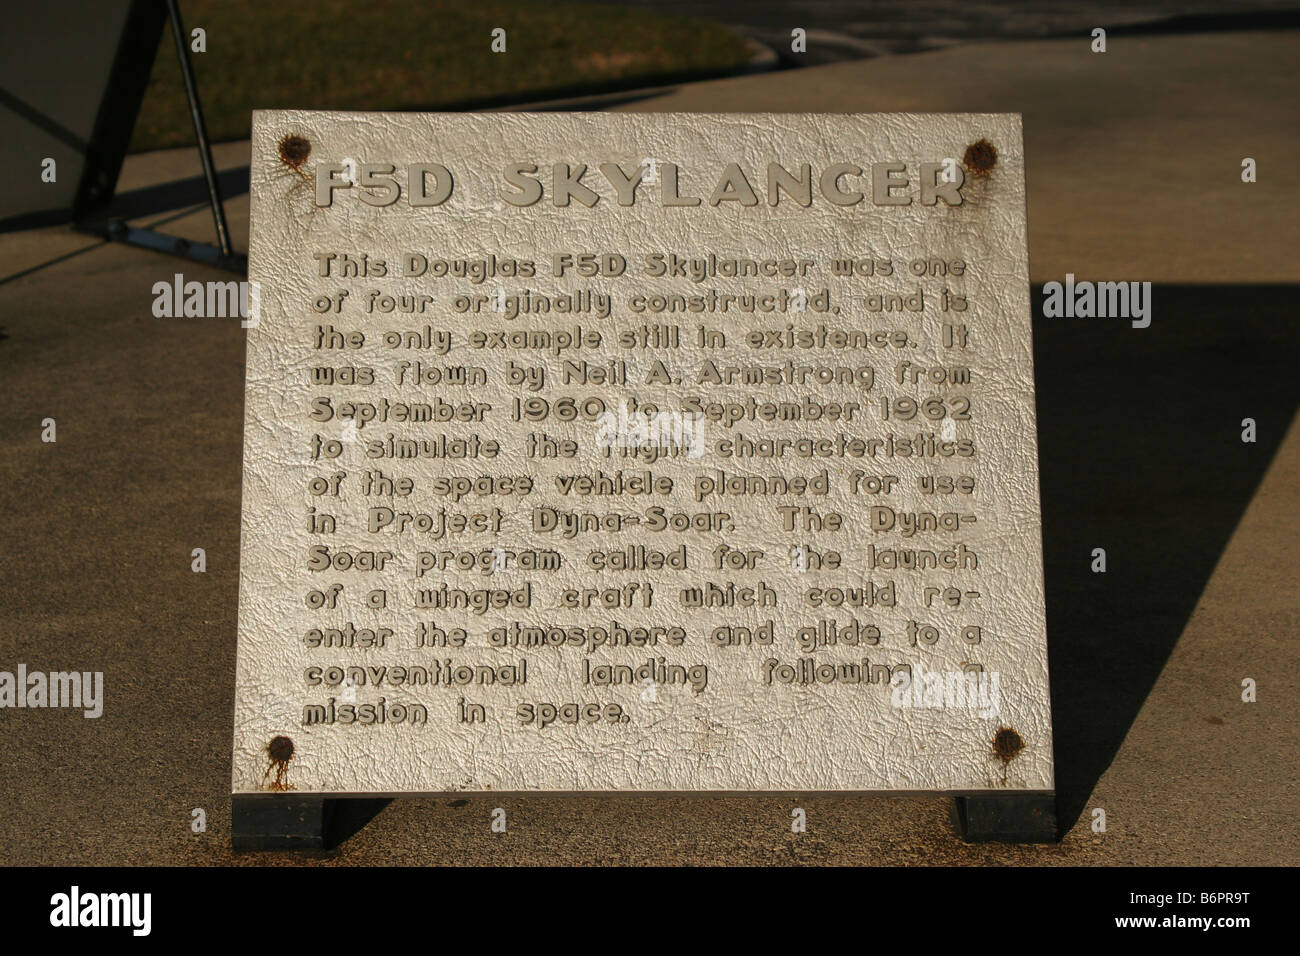 Douglas F5D Skylancer Historic Sign Stock Photo